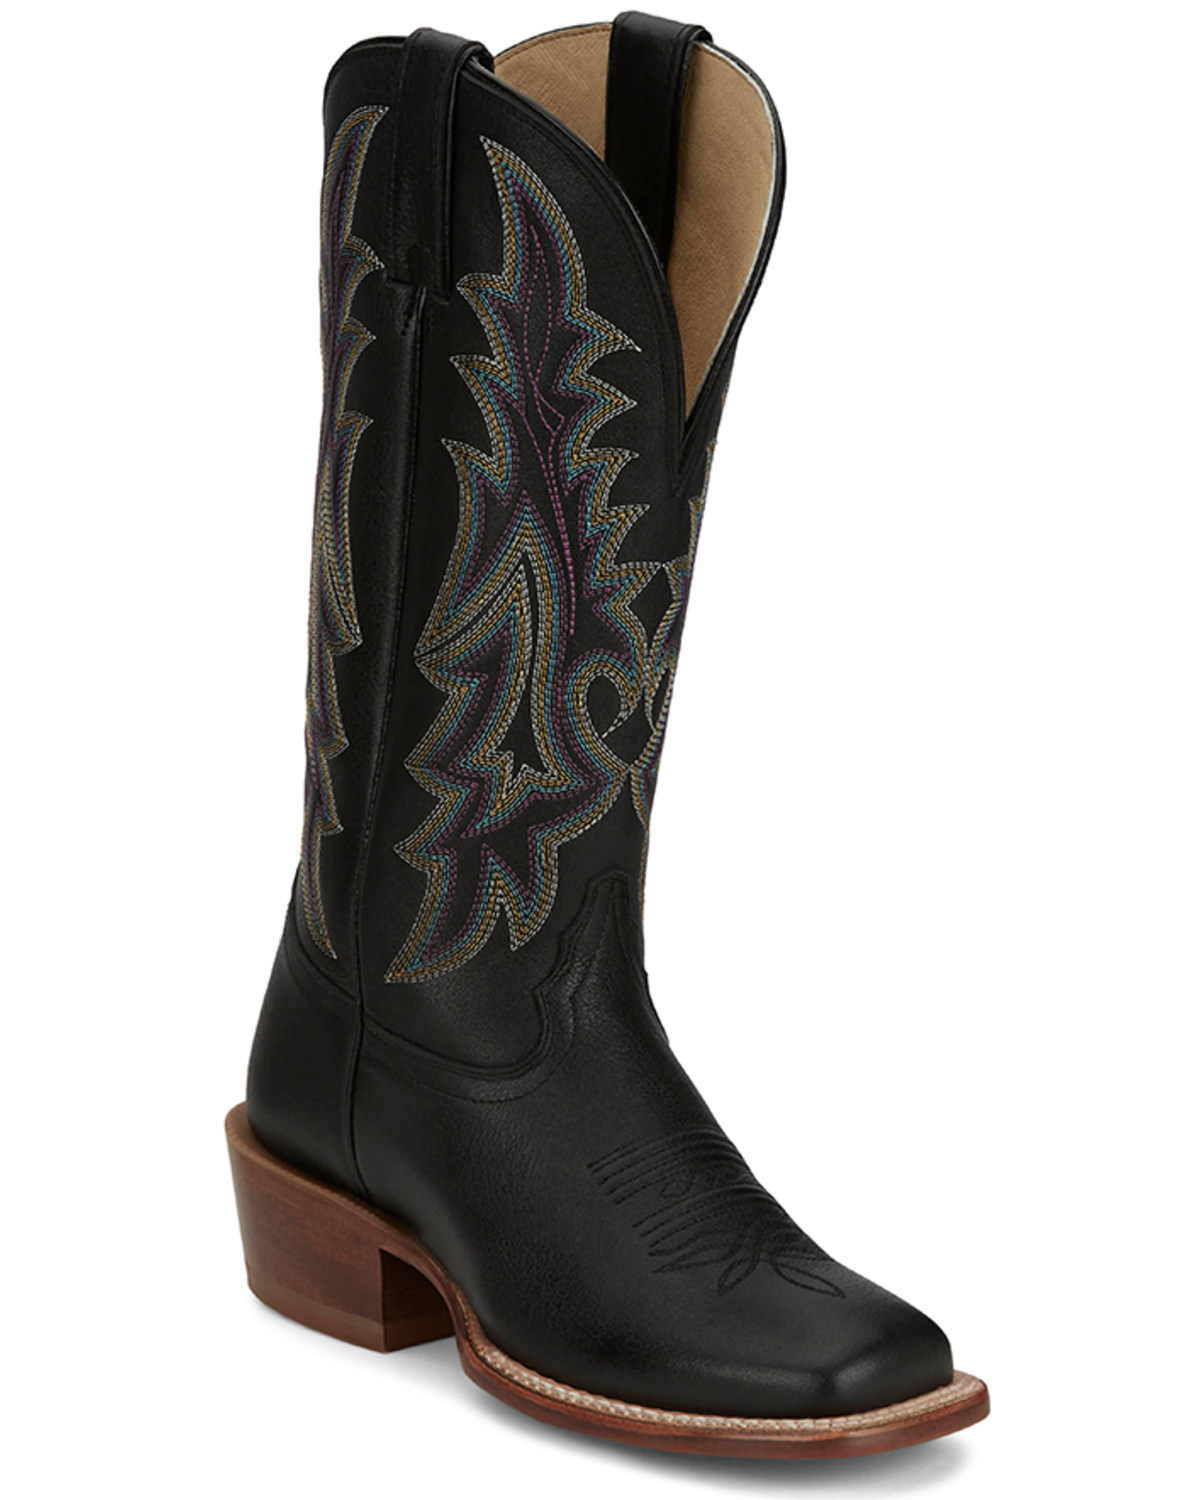 Tony Lama Women's Estella Western Boots - Square Toe